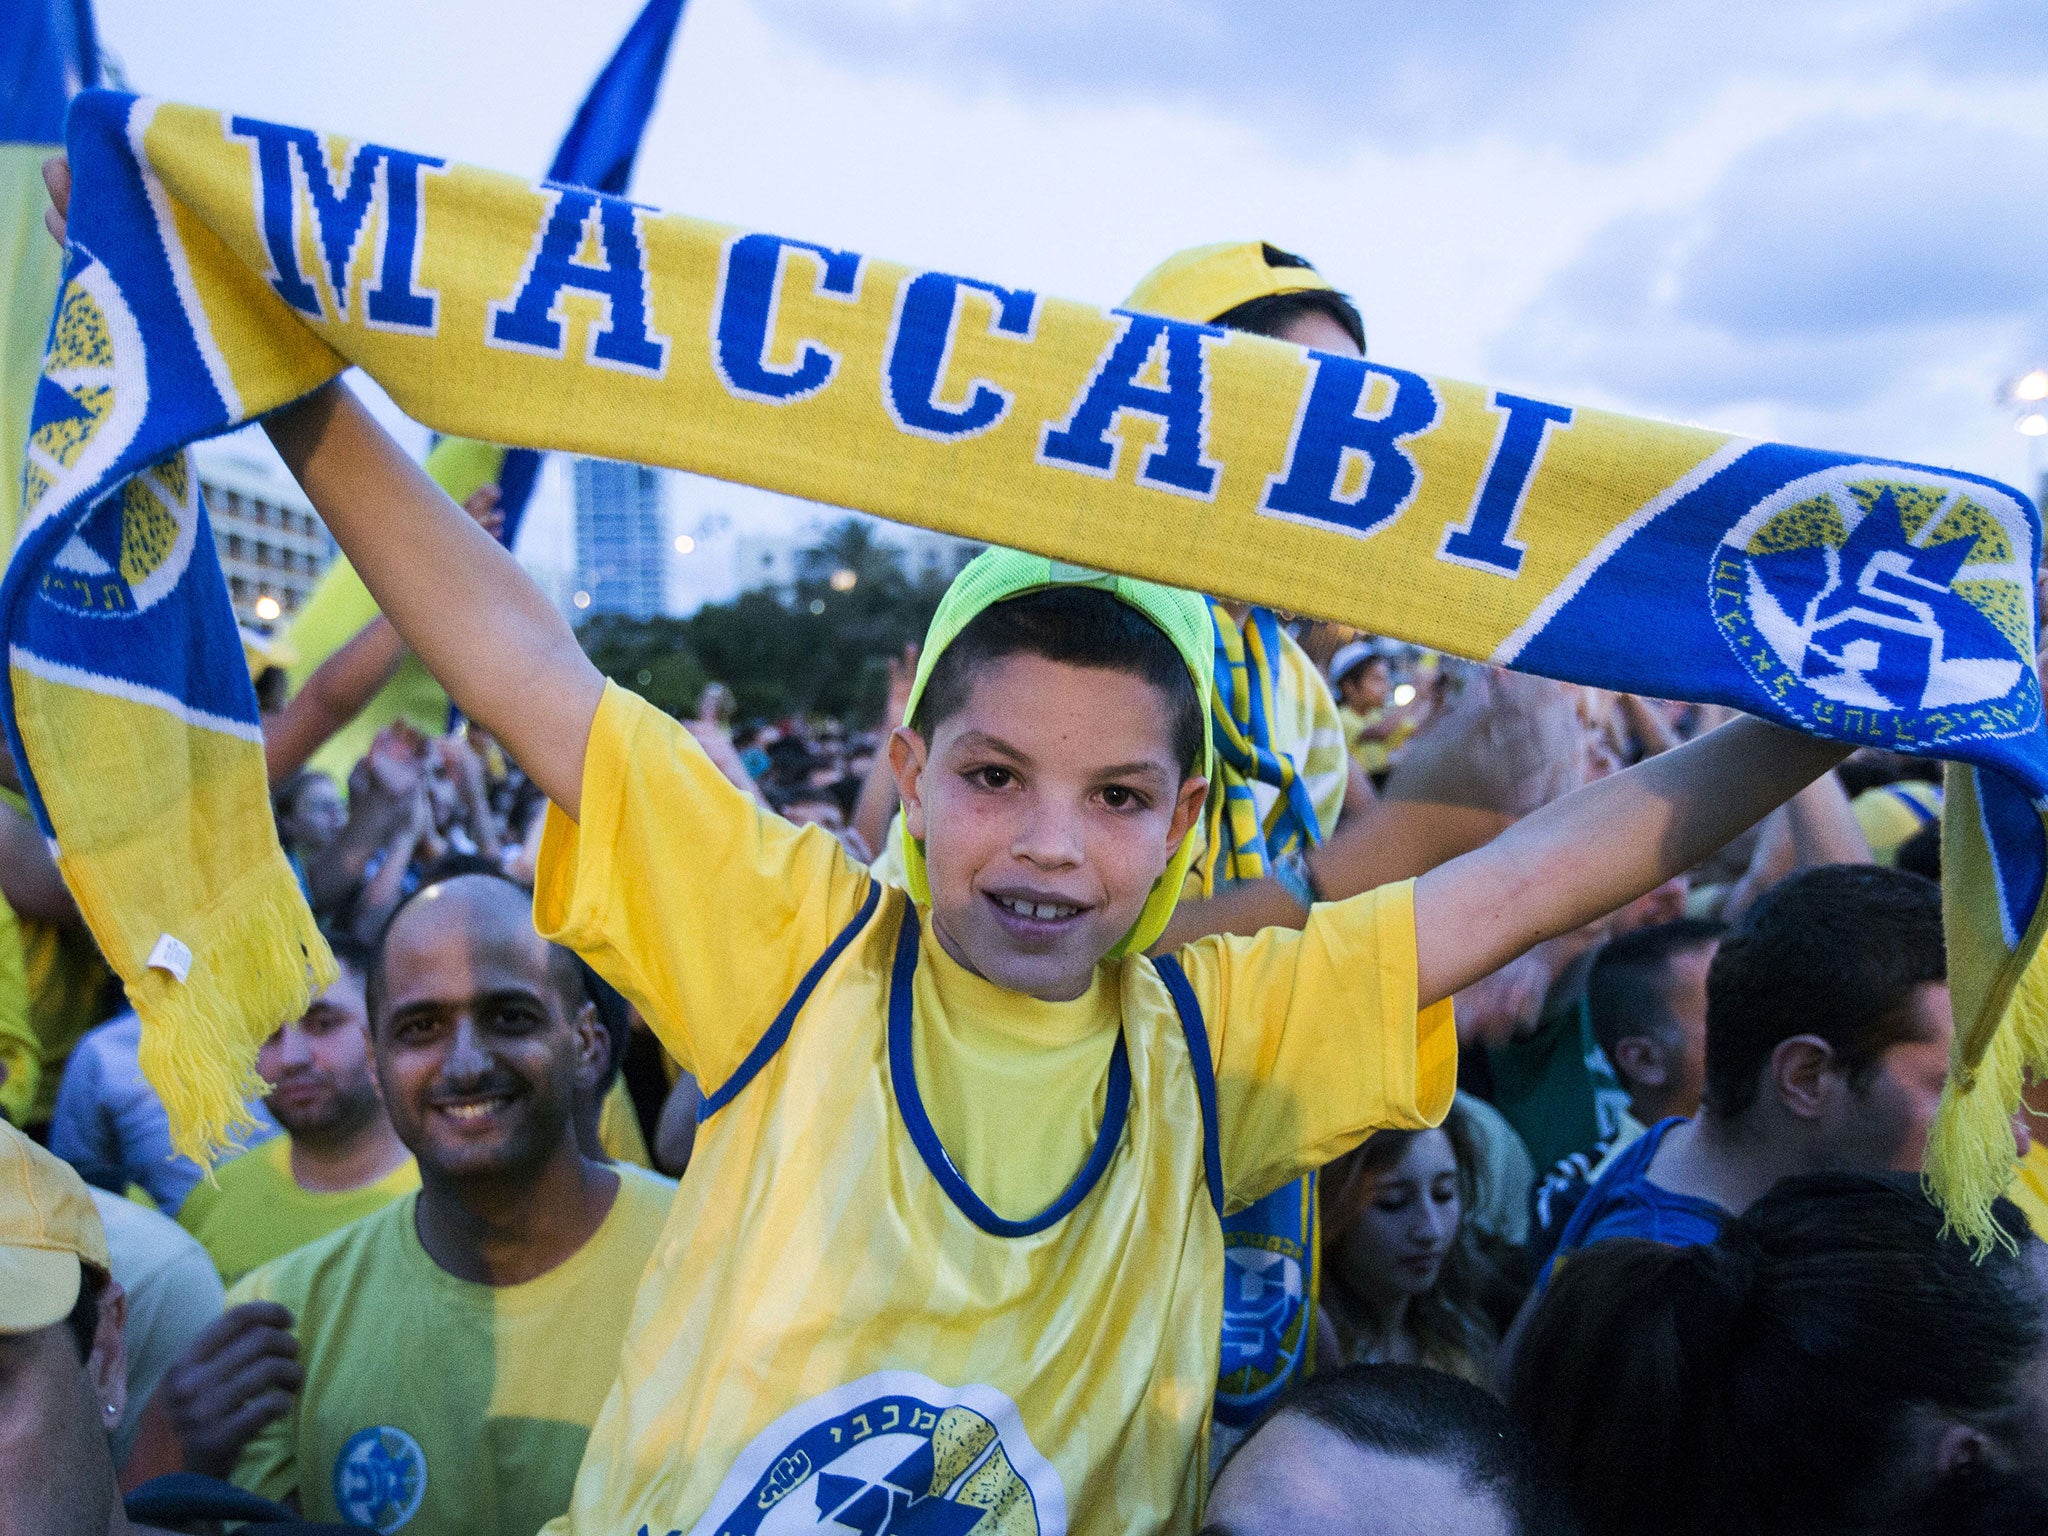 Maccabi Tel Aviv fans celebrate their team's win in Kikar Rabin or Rabin Square in Tel Aviv, on May 19, 2014, following last night's victory over Real Madrid in the Euroleague 2014